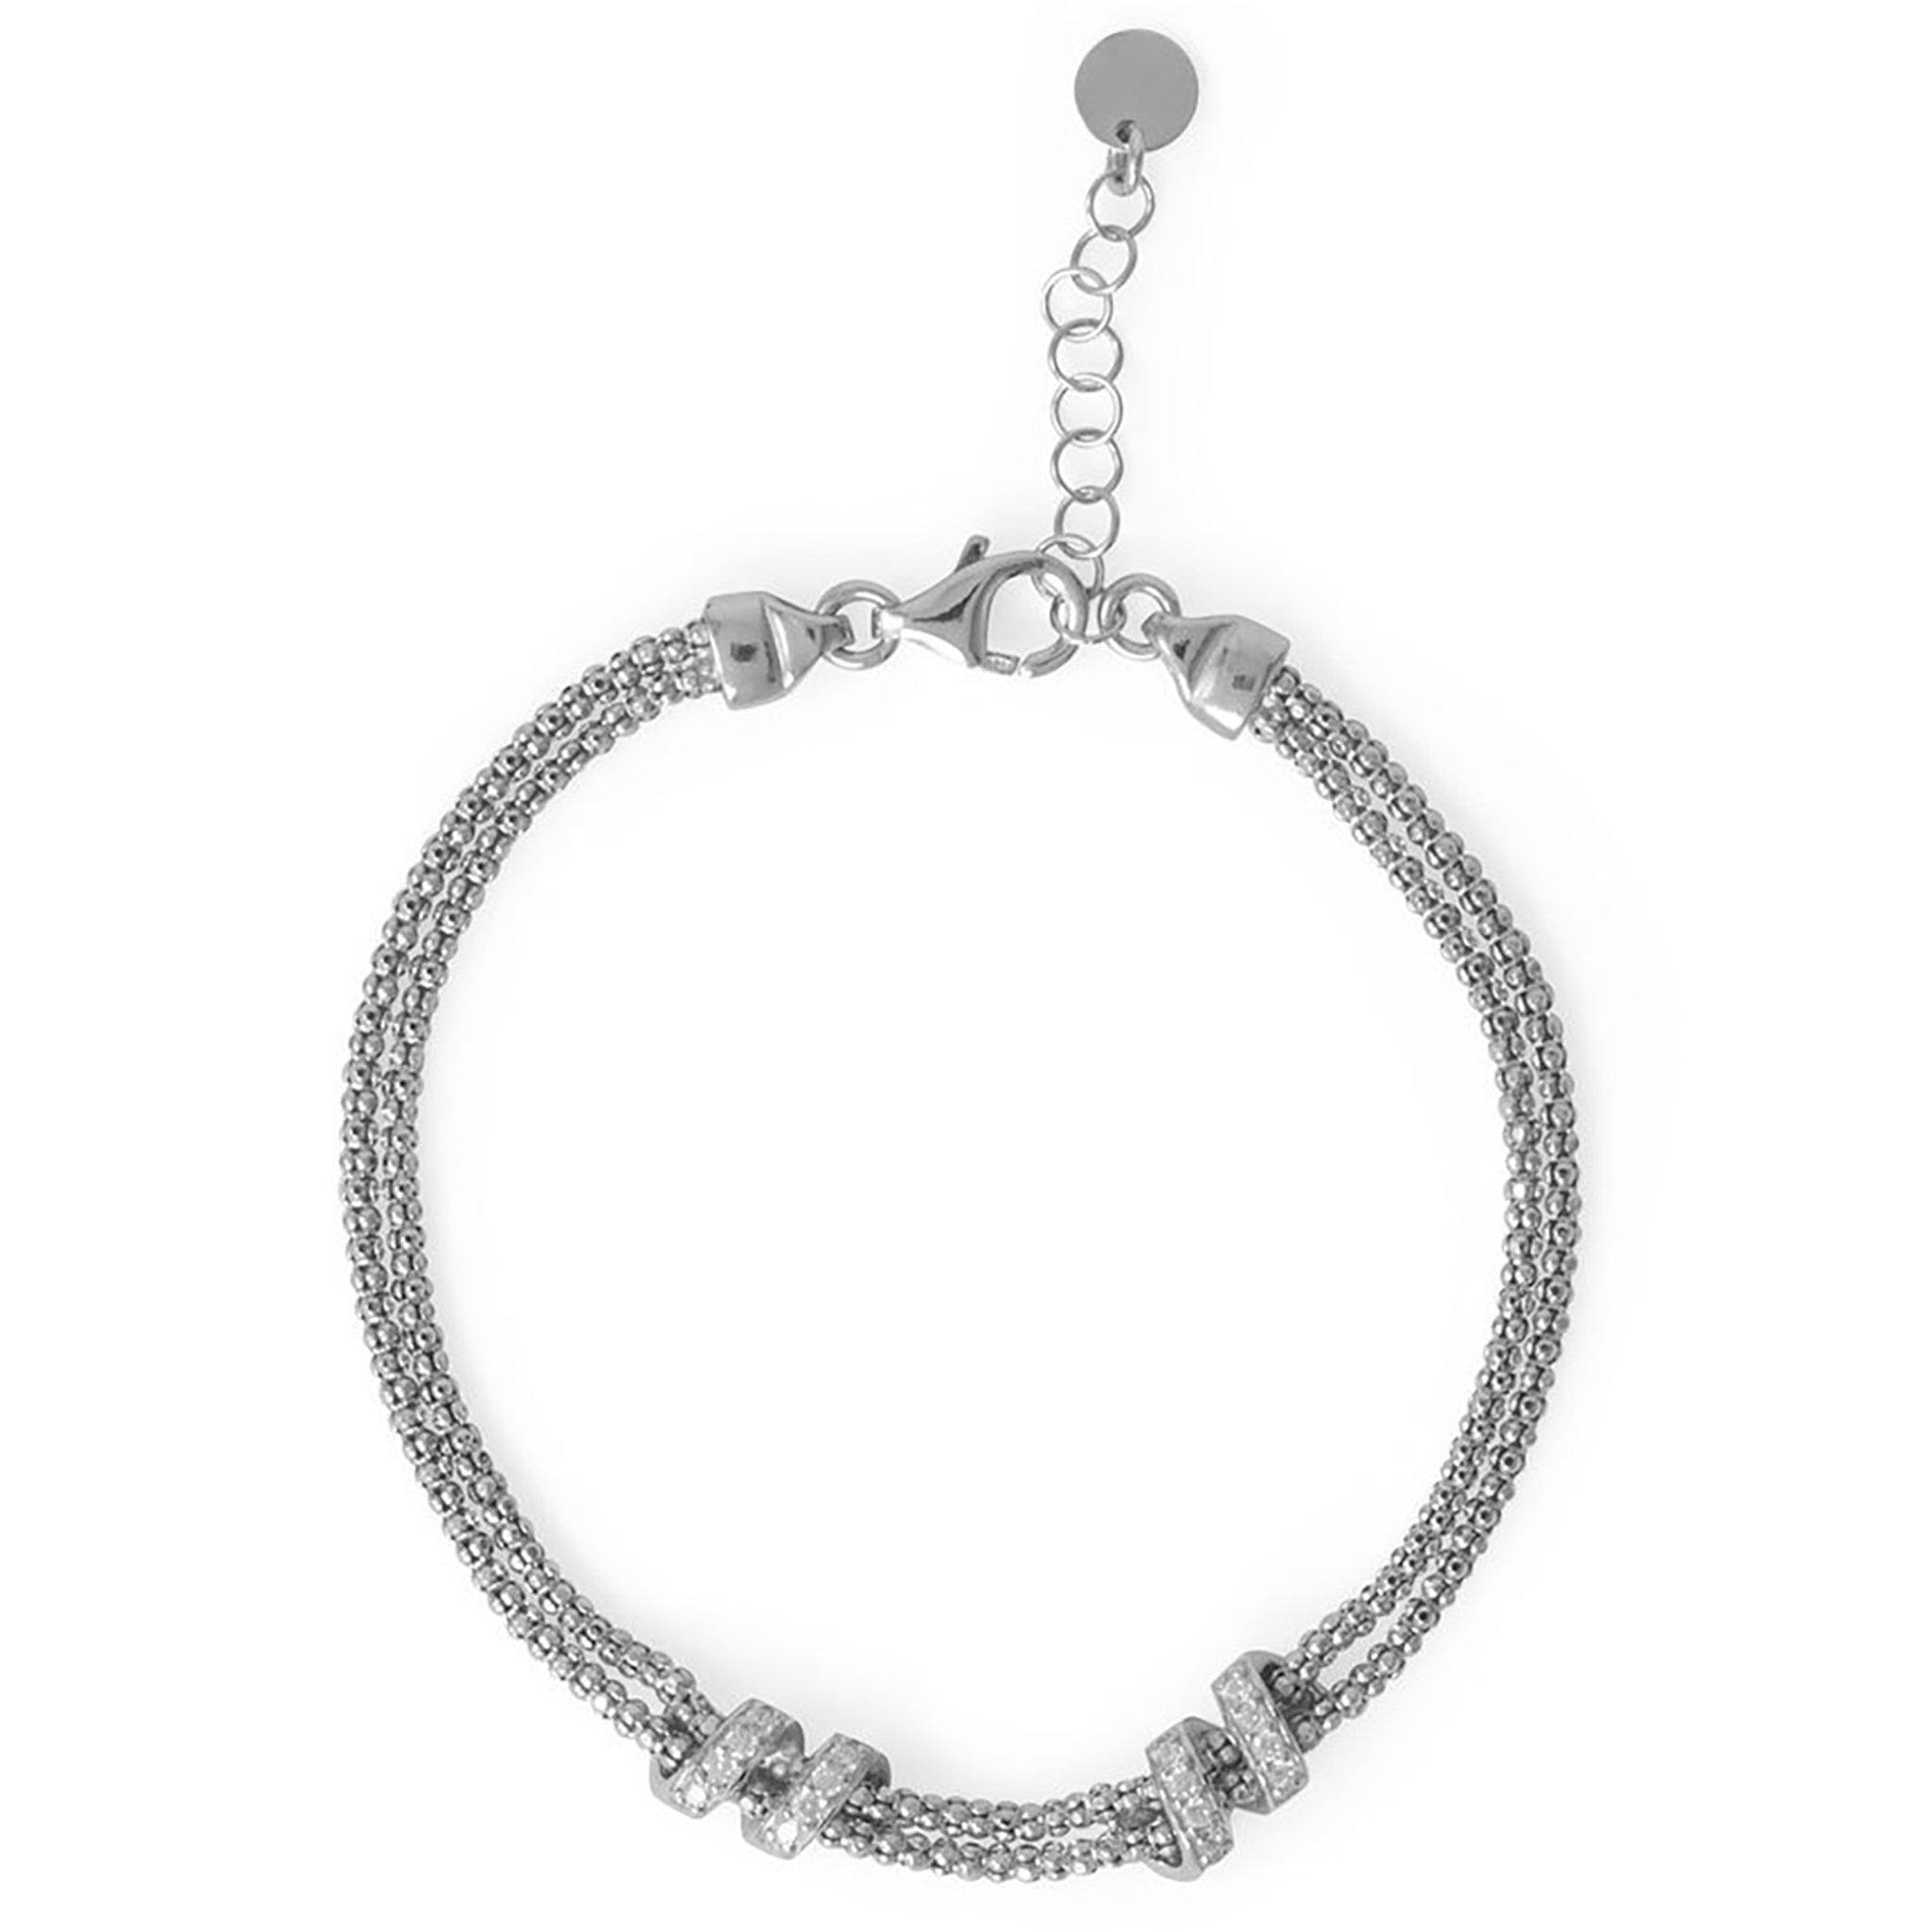 Coreana Chain Wrap Bracelet